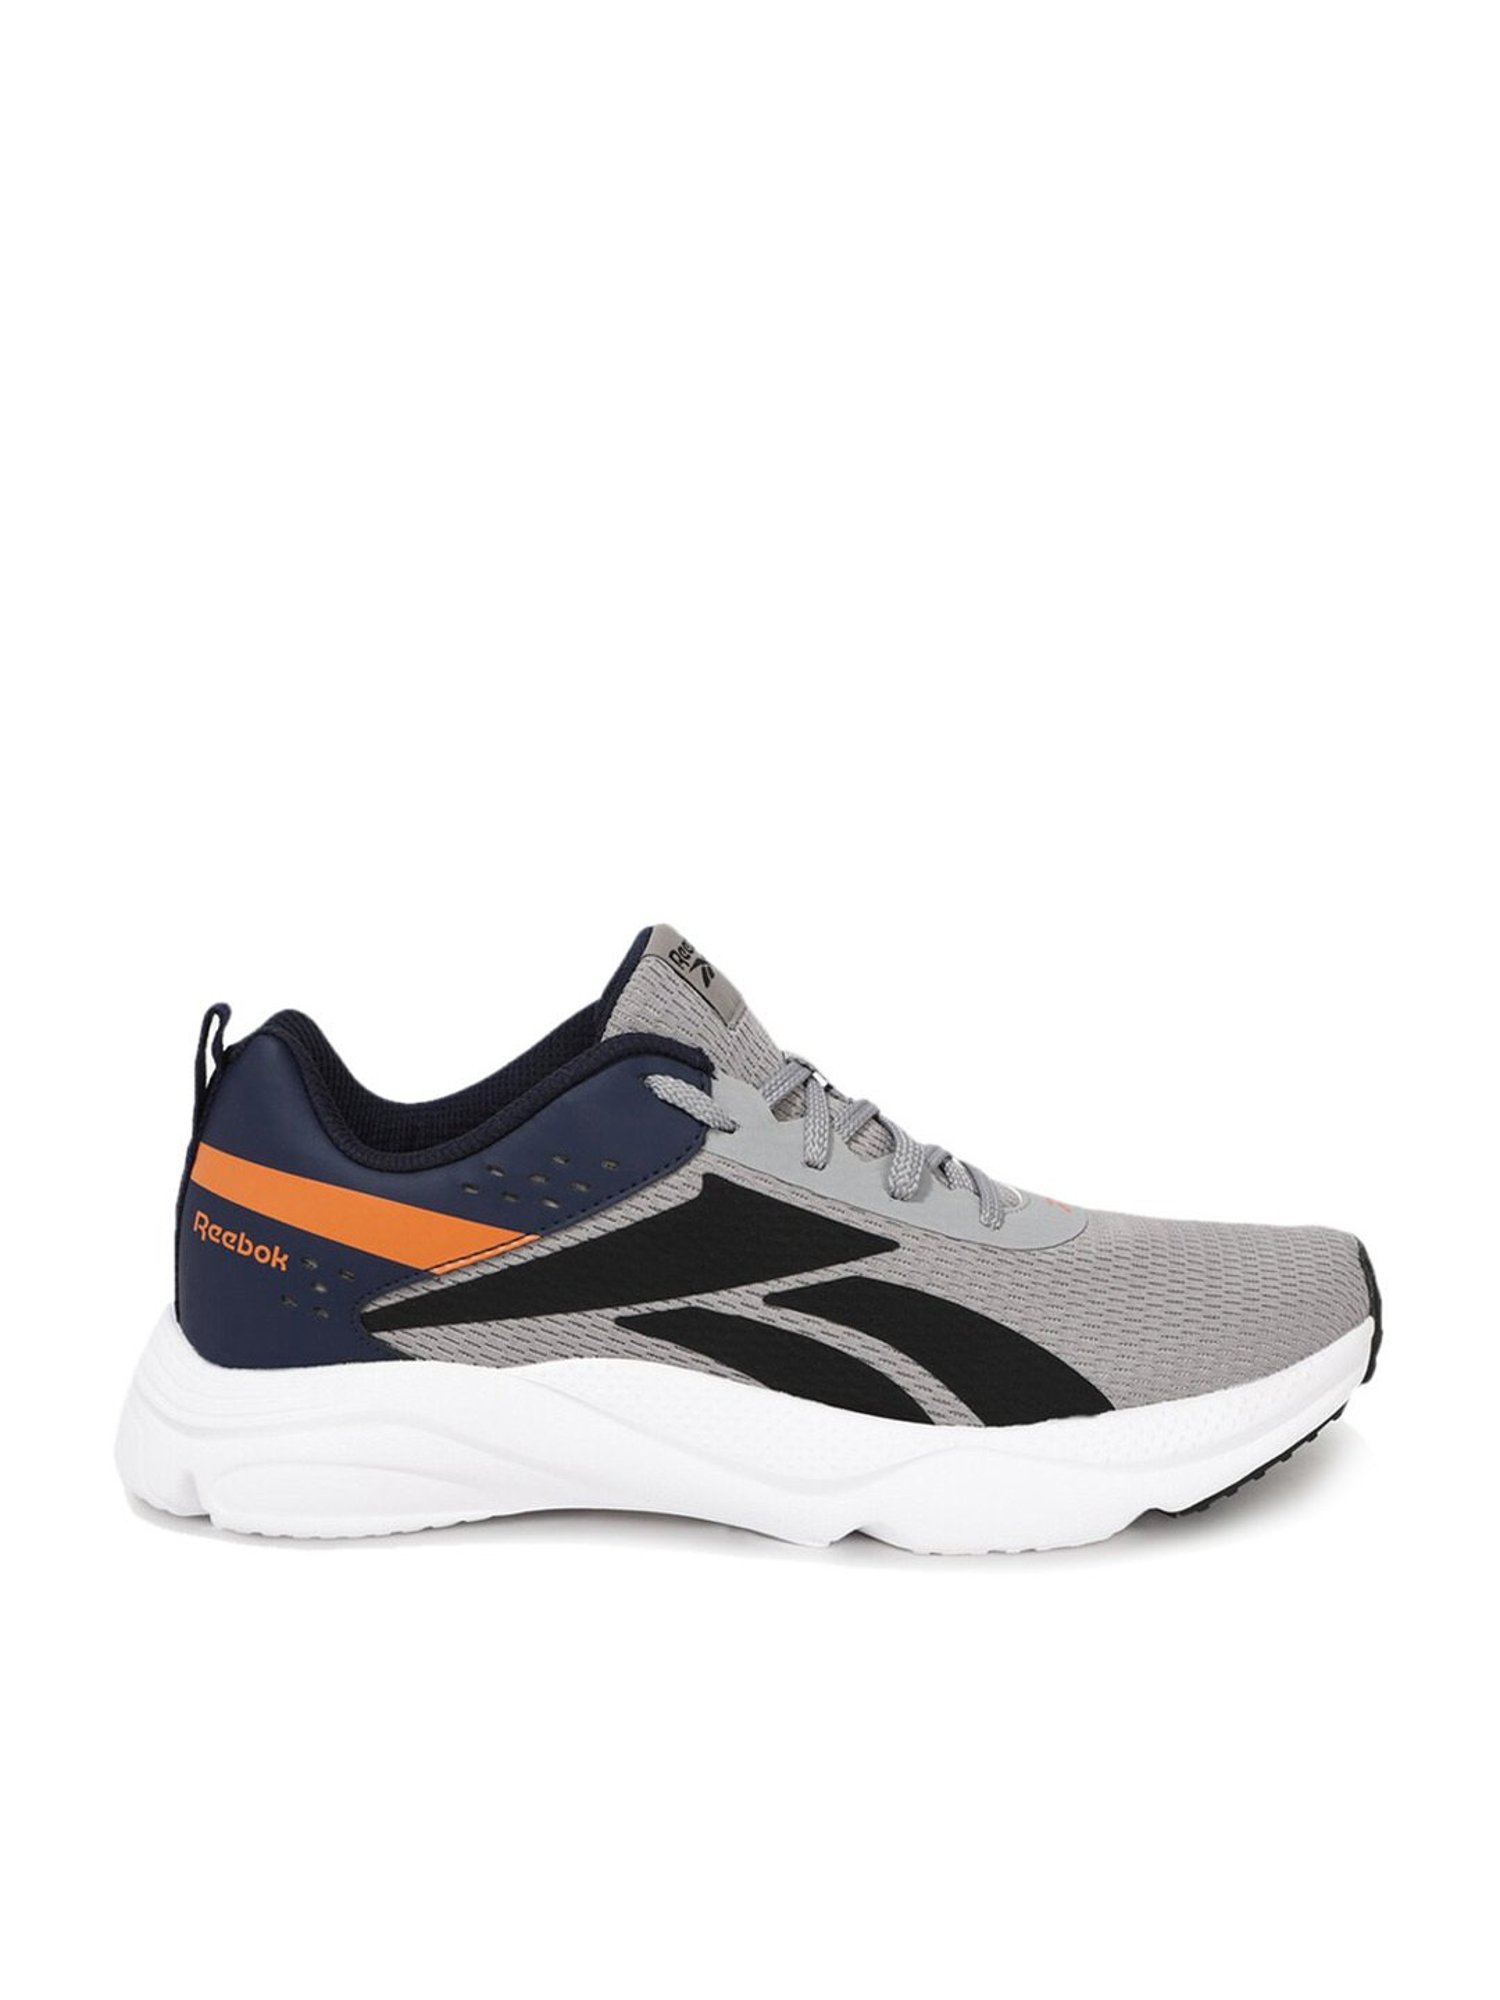 Buy Reebok Men's Runway Grey Running Shoes for Men at Best Price @ Tata CLiQ